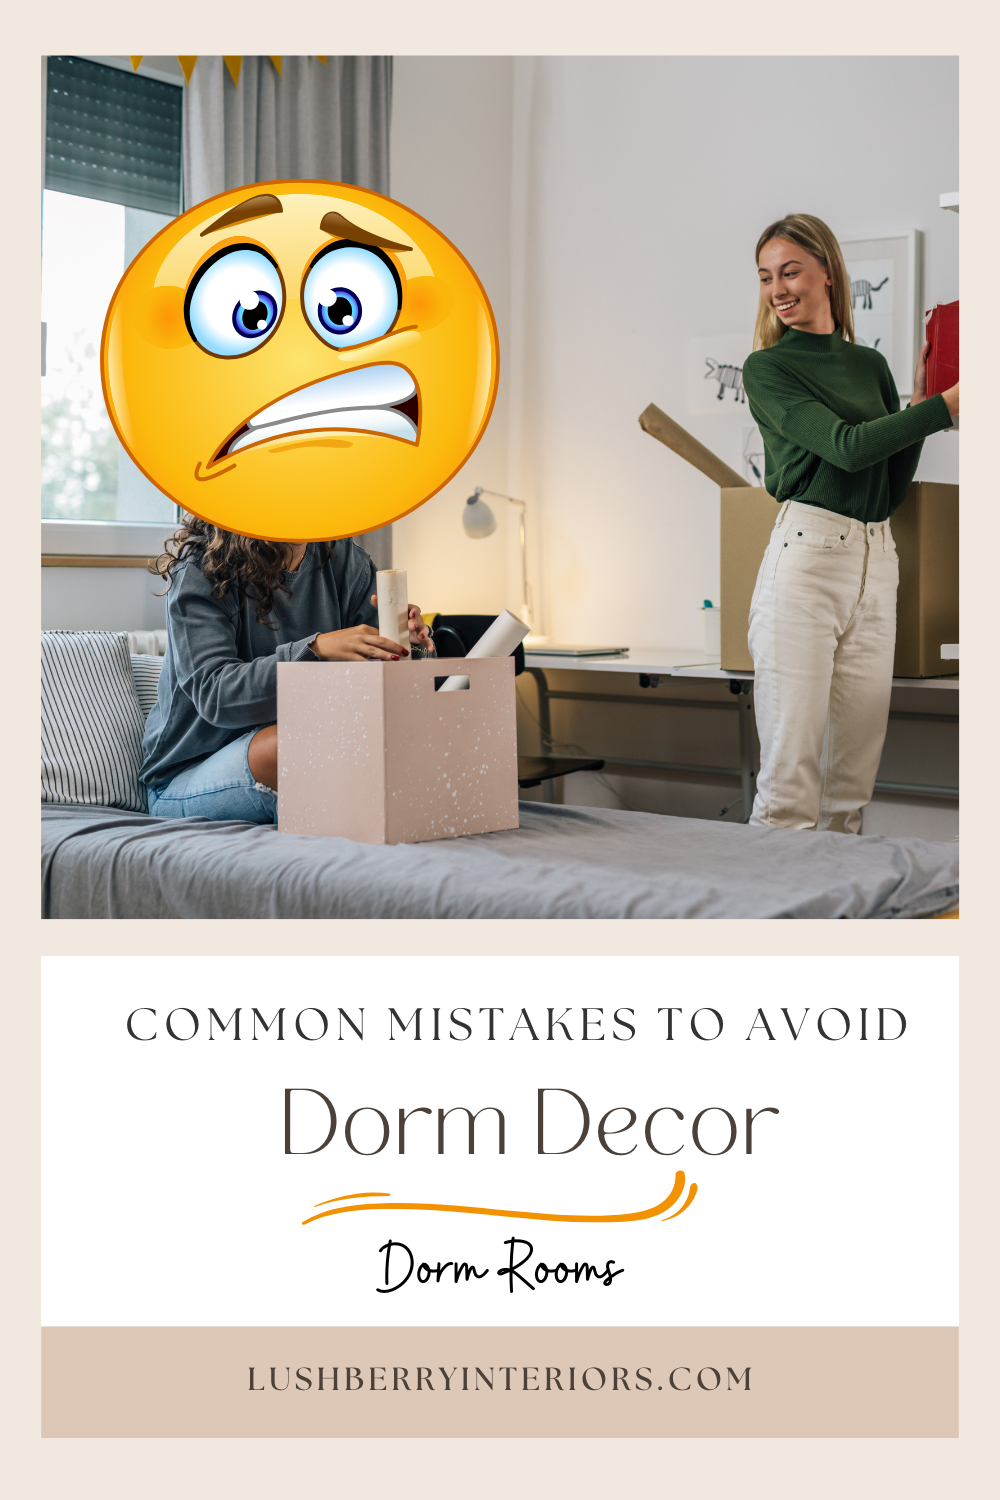 5 Common Dorm Decor Mistakes to Avoid